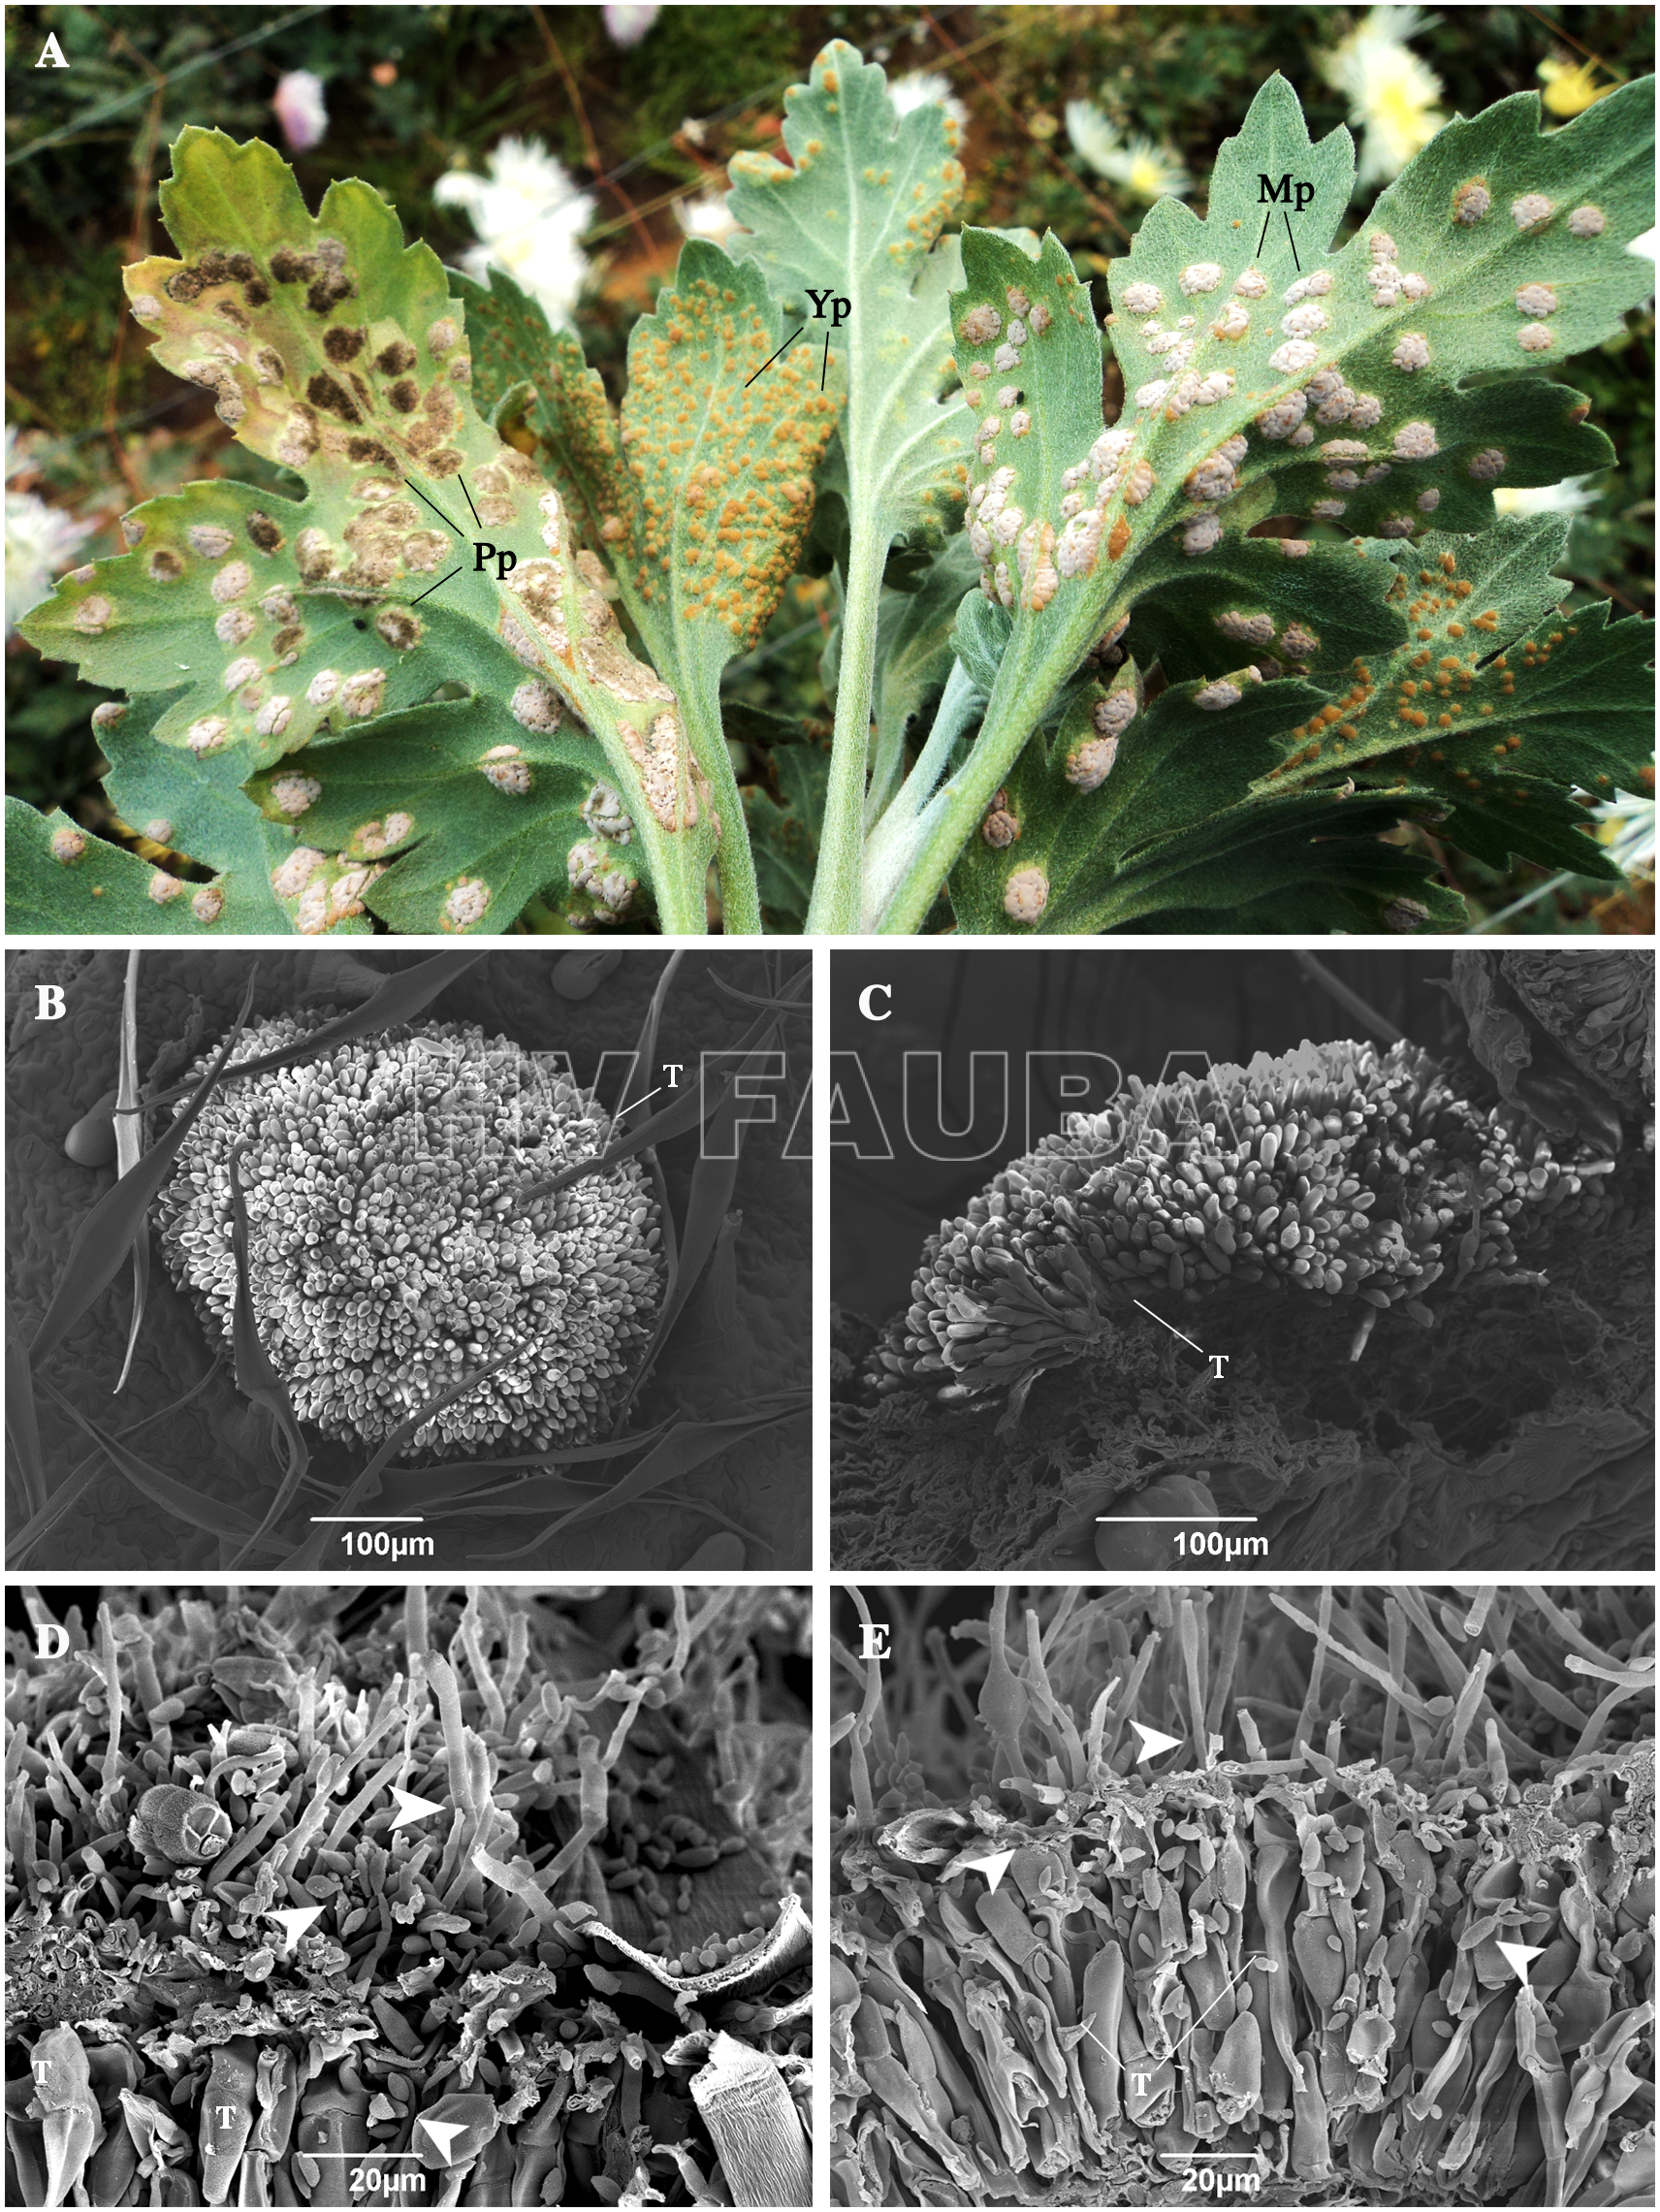 Telia de Puccinia horiana parasitada por hongos en el campo. (A) Hojas recolectadas del campo. Pp: pústula parasitada; Yp: pústula joven; Pf: pústula madura. (B-C) Pústulas no dañadas. (D-E) Pústulas dañadas con hongos morfológicamente similares al género Cladosporium. Las puntas de flecha indican estructuras que se asemejan a Cladosporium sp. T: teliosporas de P. horiana. Autor: Torres et al., 2017.